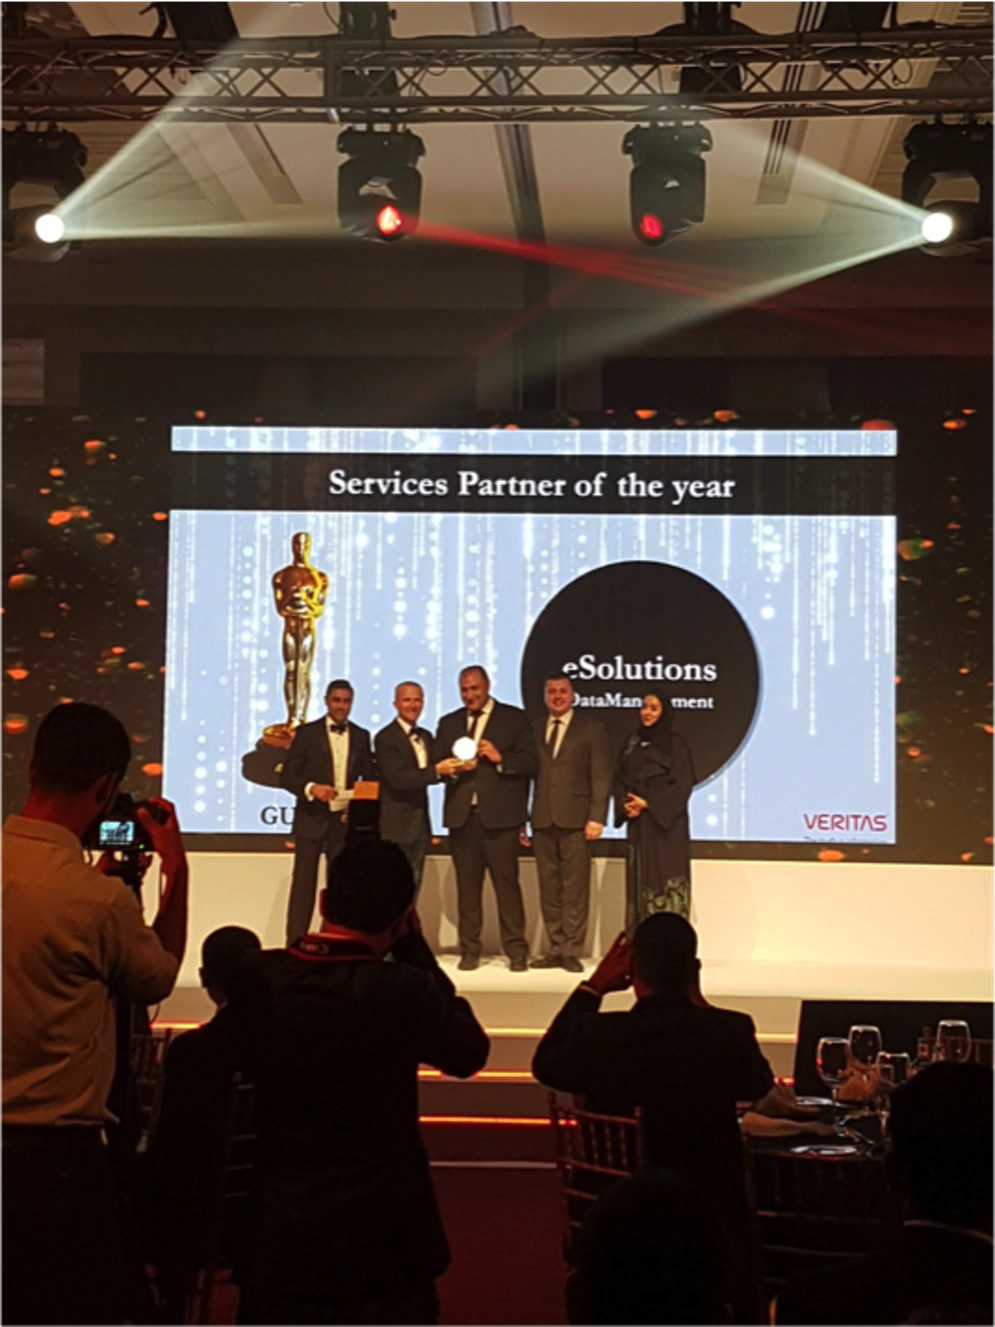 eSolutions Data Management The “Services Partner of the year” award from Veritas for year 2018